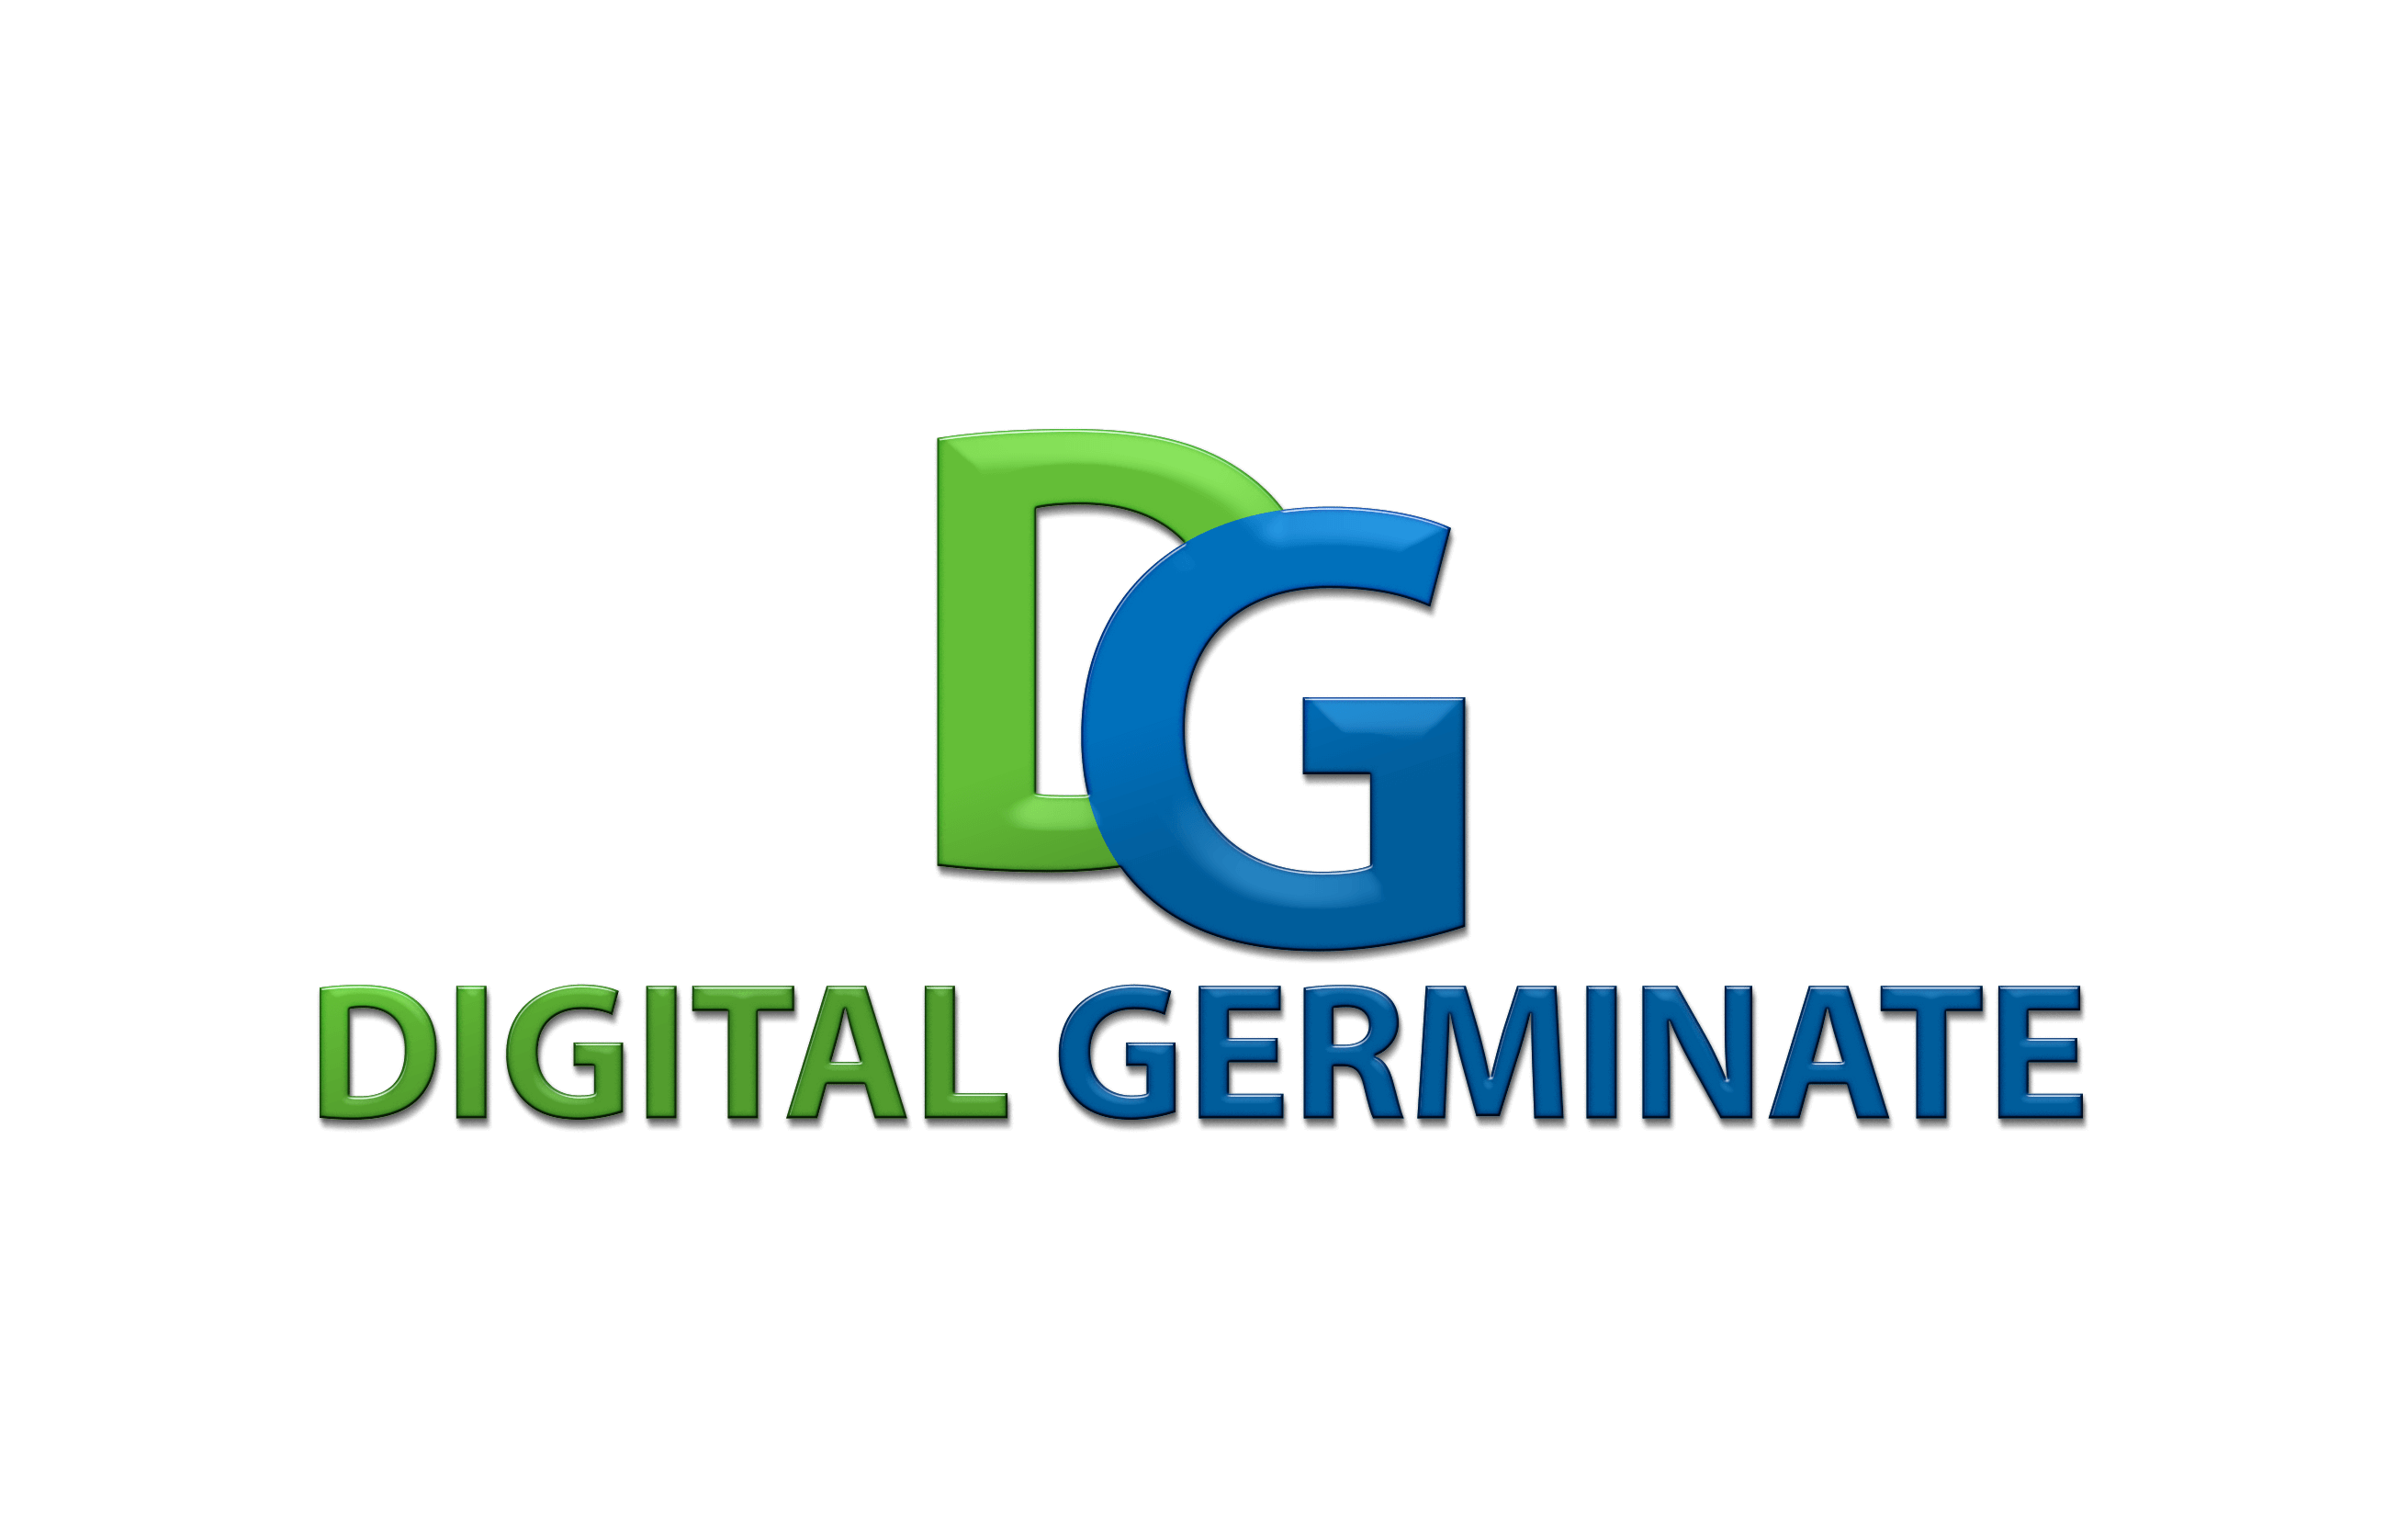 Digital Germinate